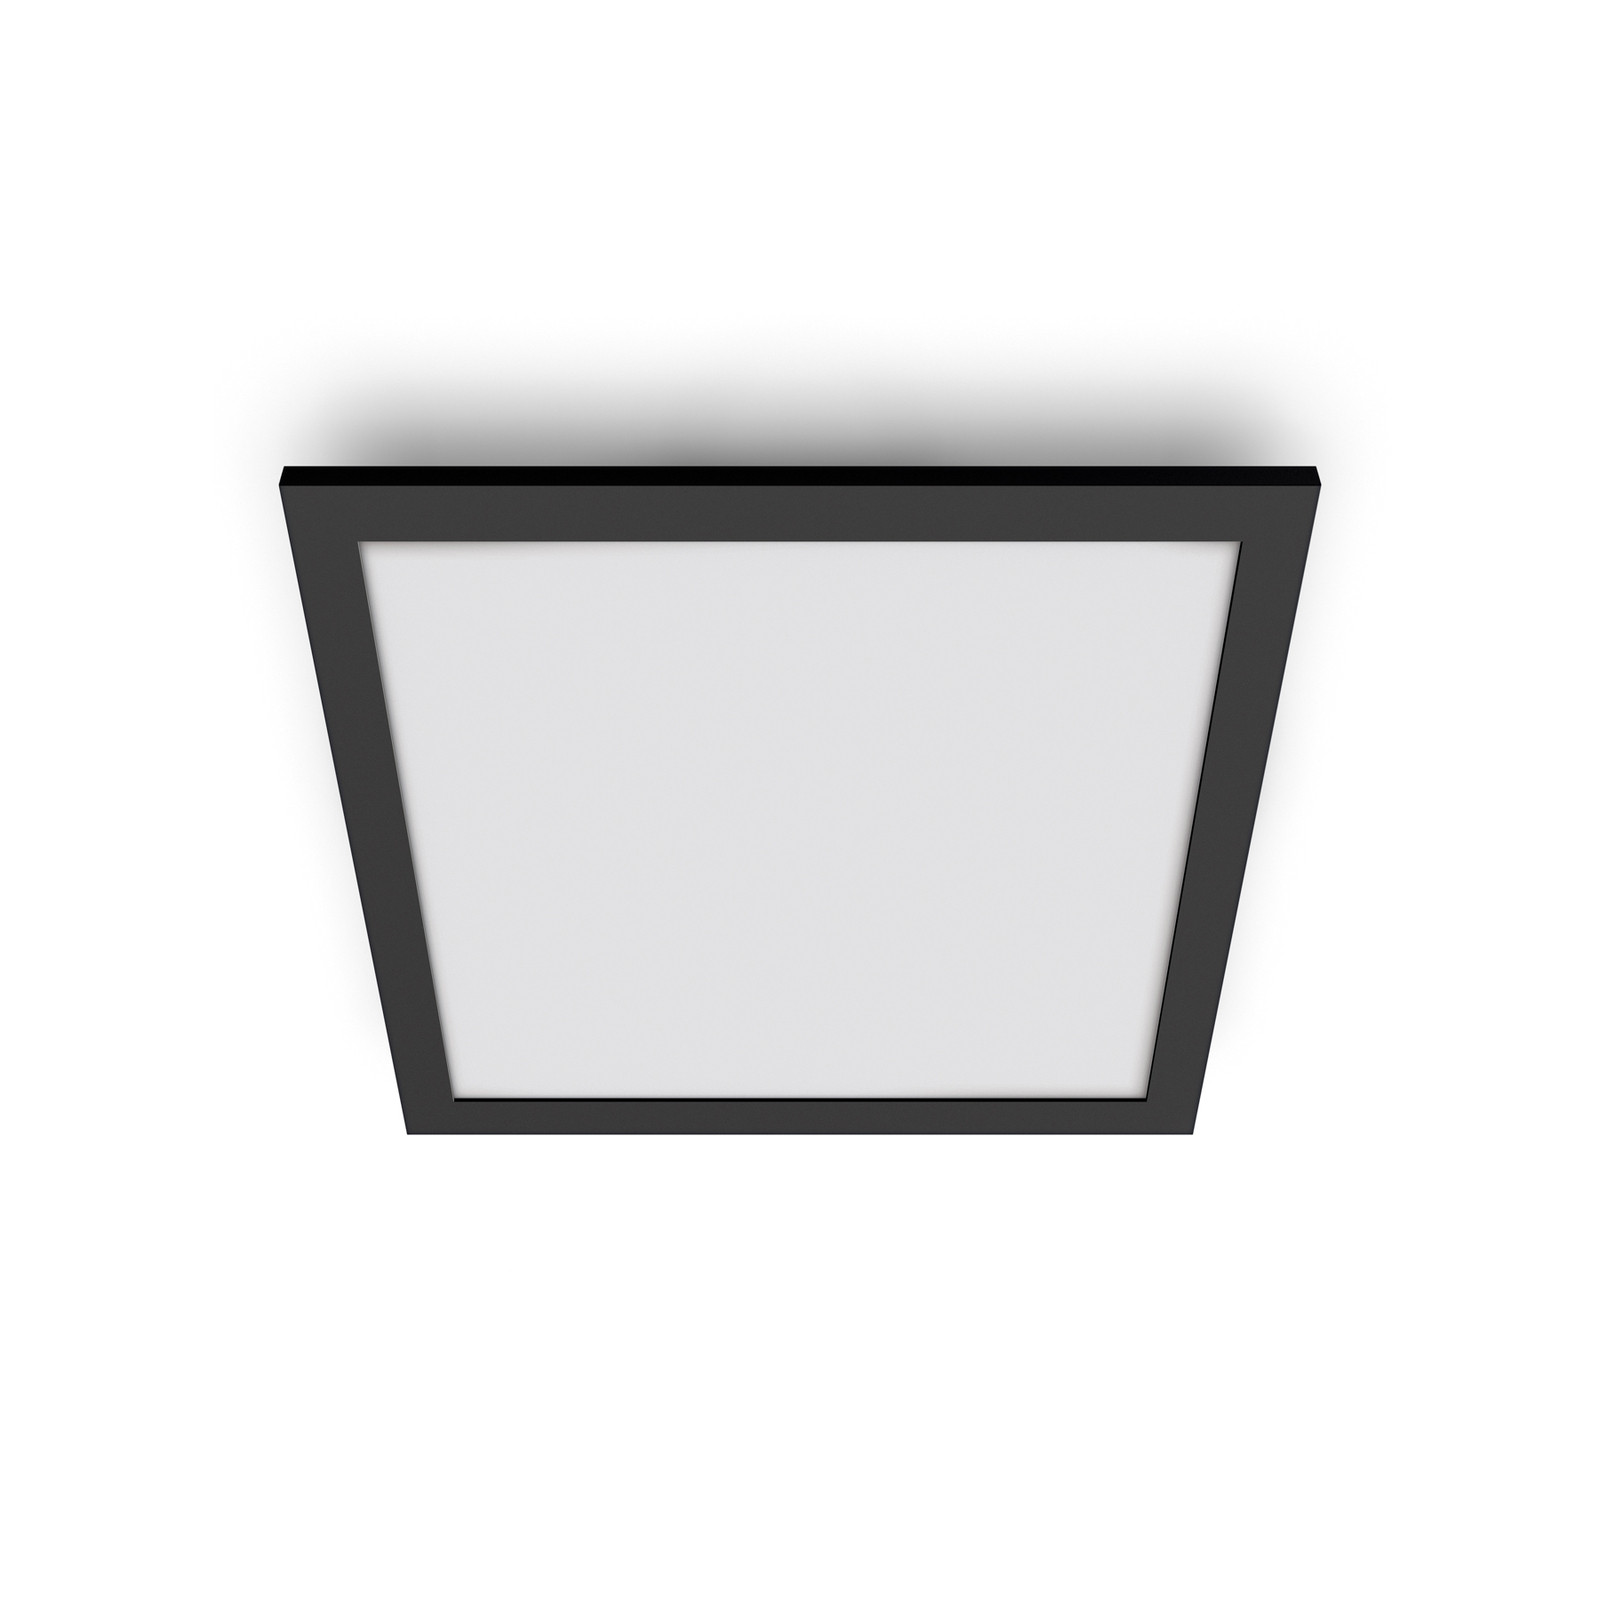 WiZ LED mennyezeti lámpapanel, fekete, 60x60 cm, 60x60 cm